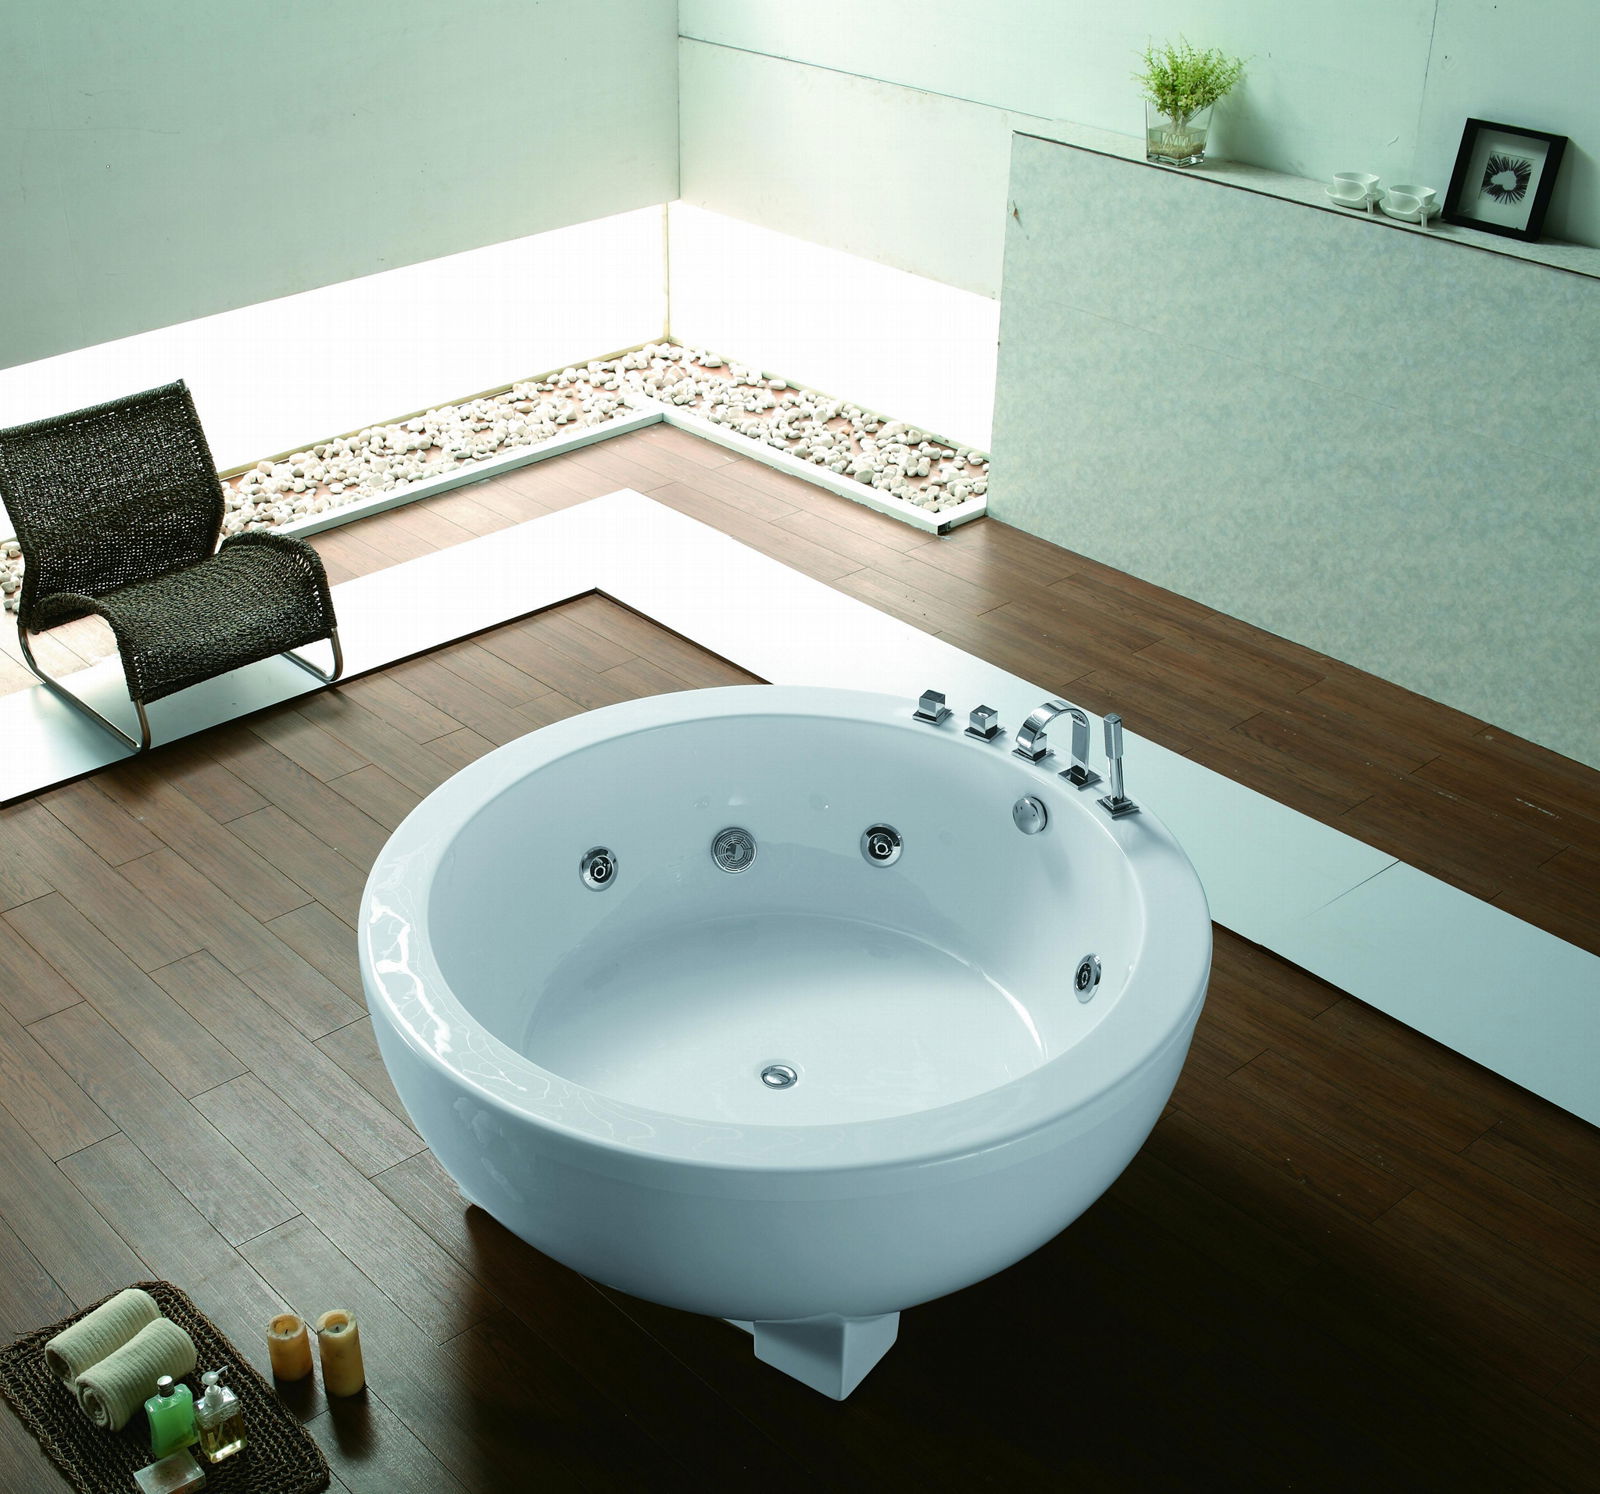 Alanbro Luxury Two Person Freestanding Round Whirlpool Acrylic Bathtub